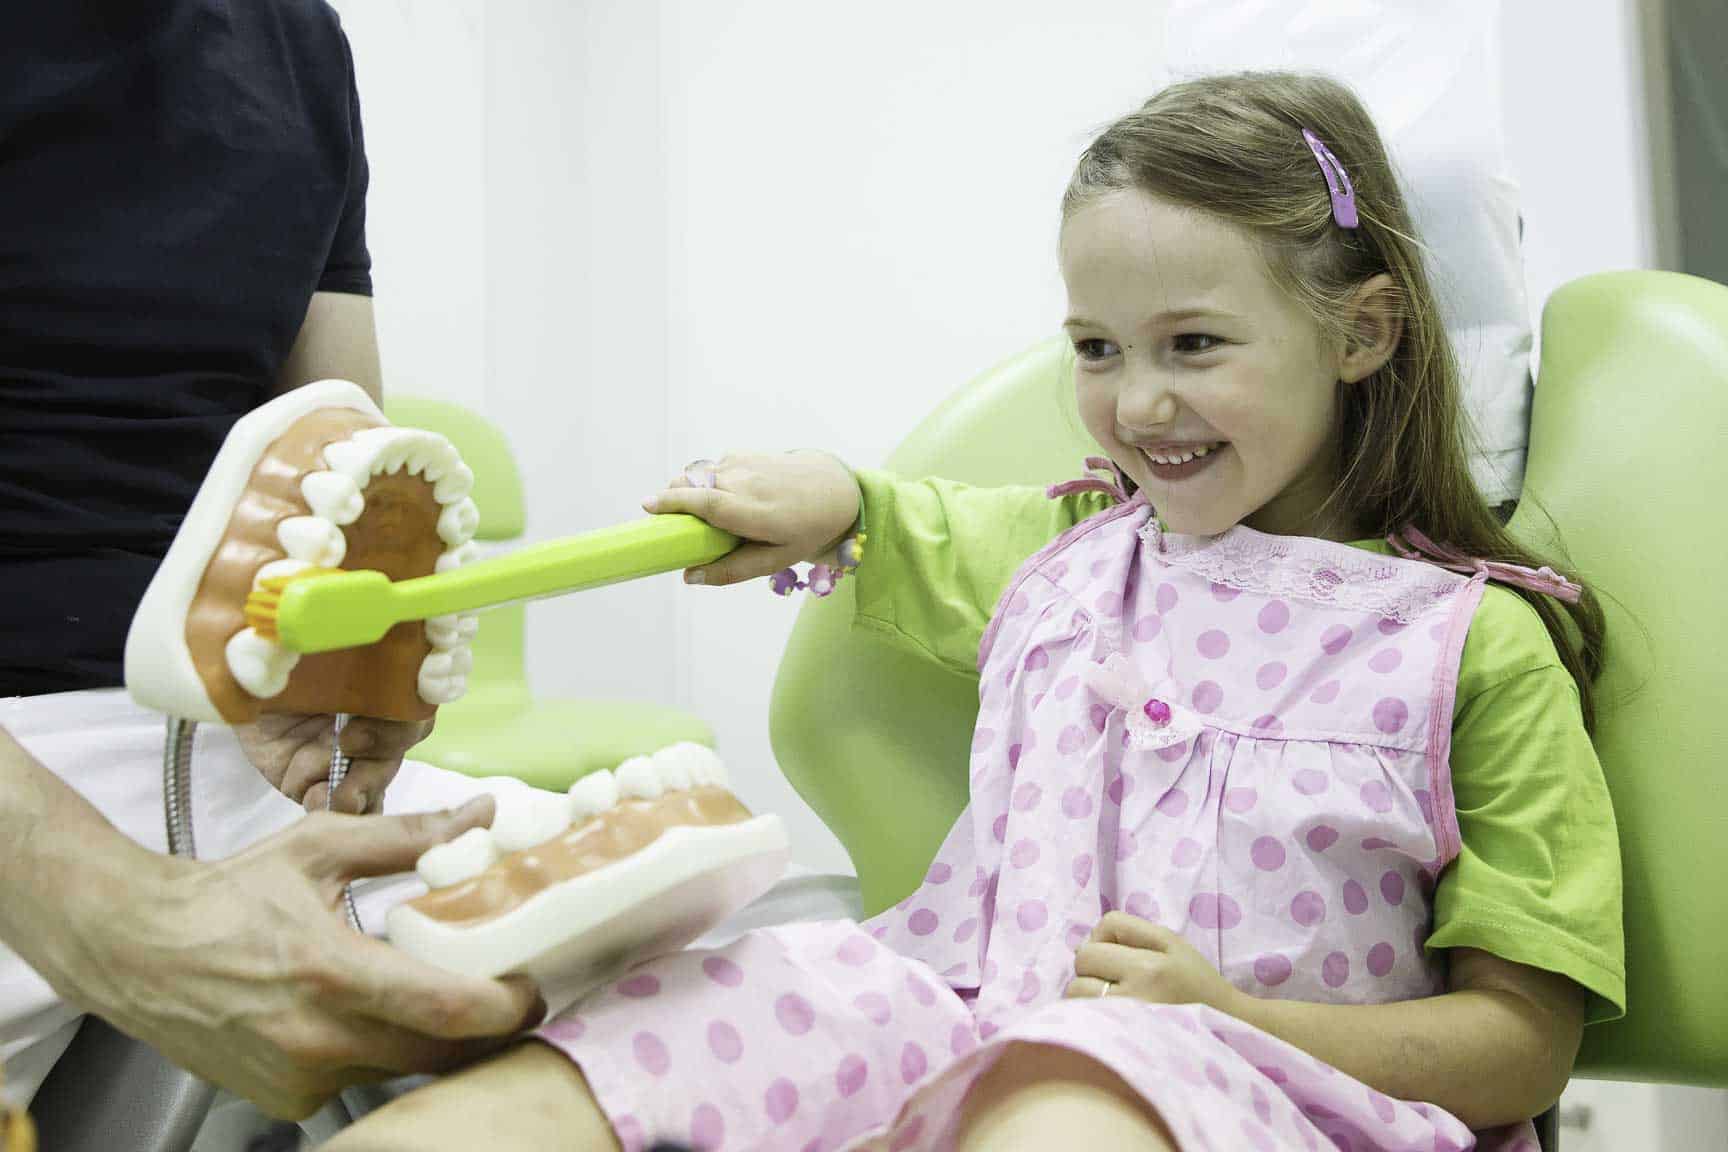 Preventative Dental Care at Newburyport Pediatric Dentistry